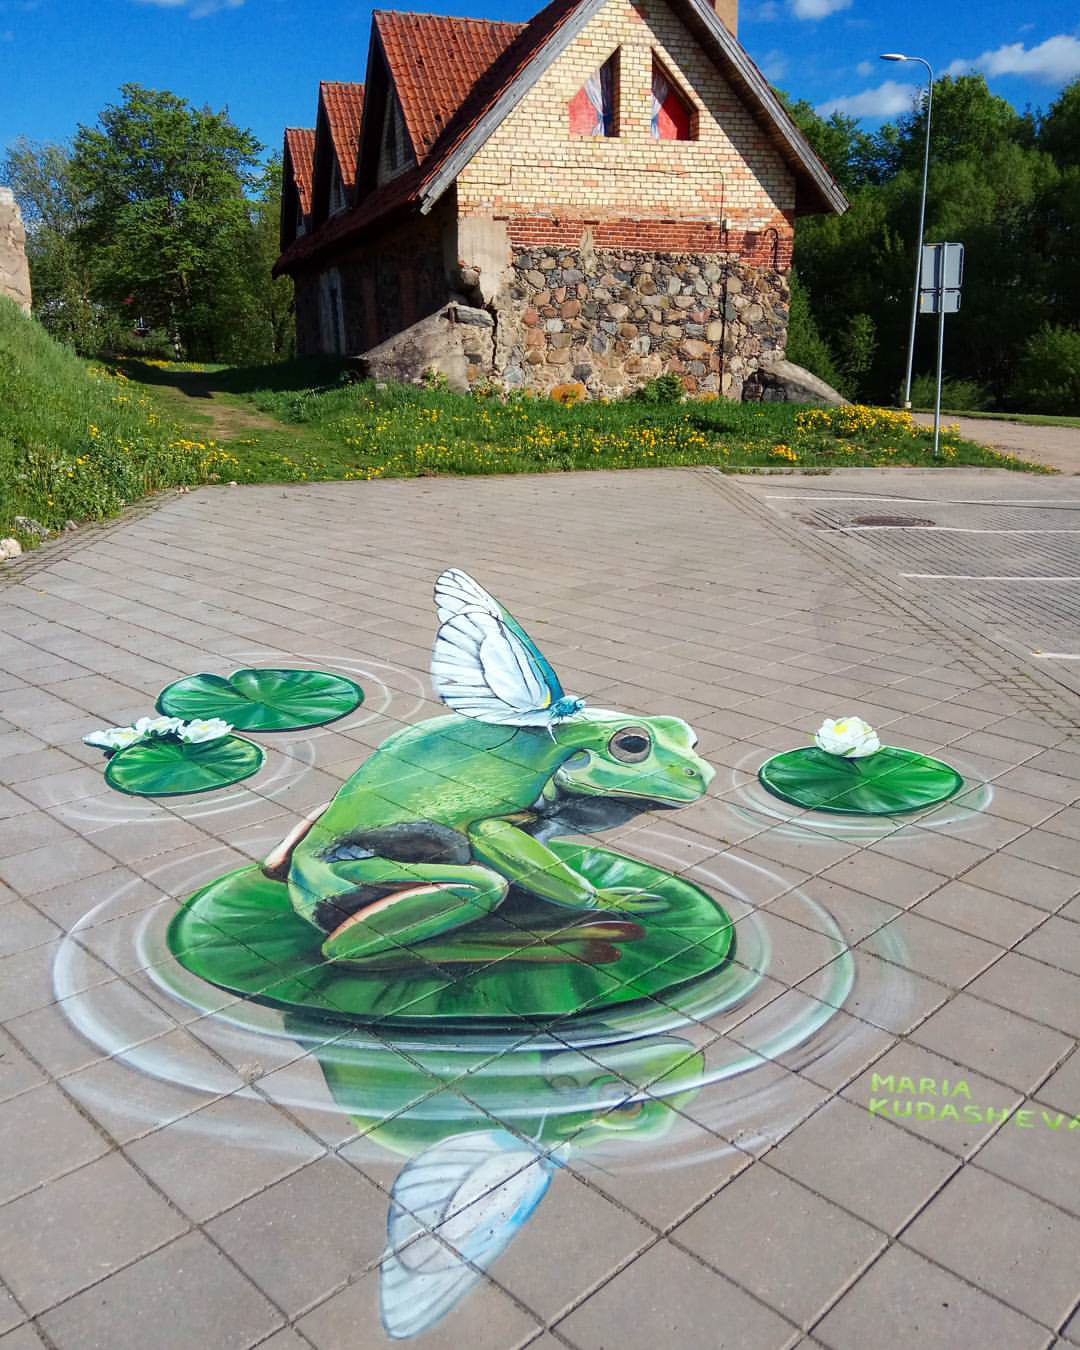 3D drawing "Frog traveler" at the festival “Seven hills” in Rezekne, Latvia, 2017.